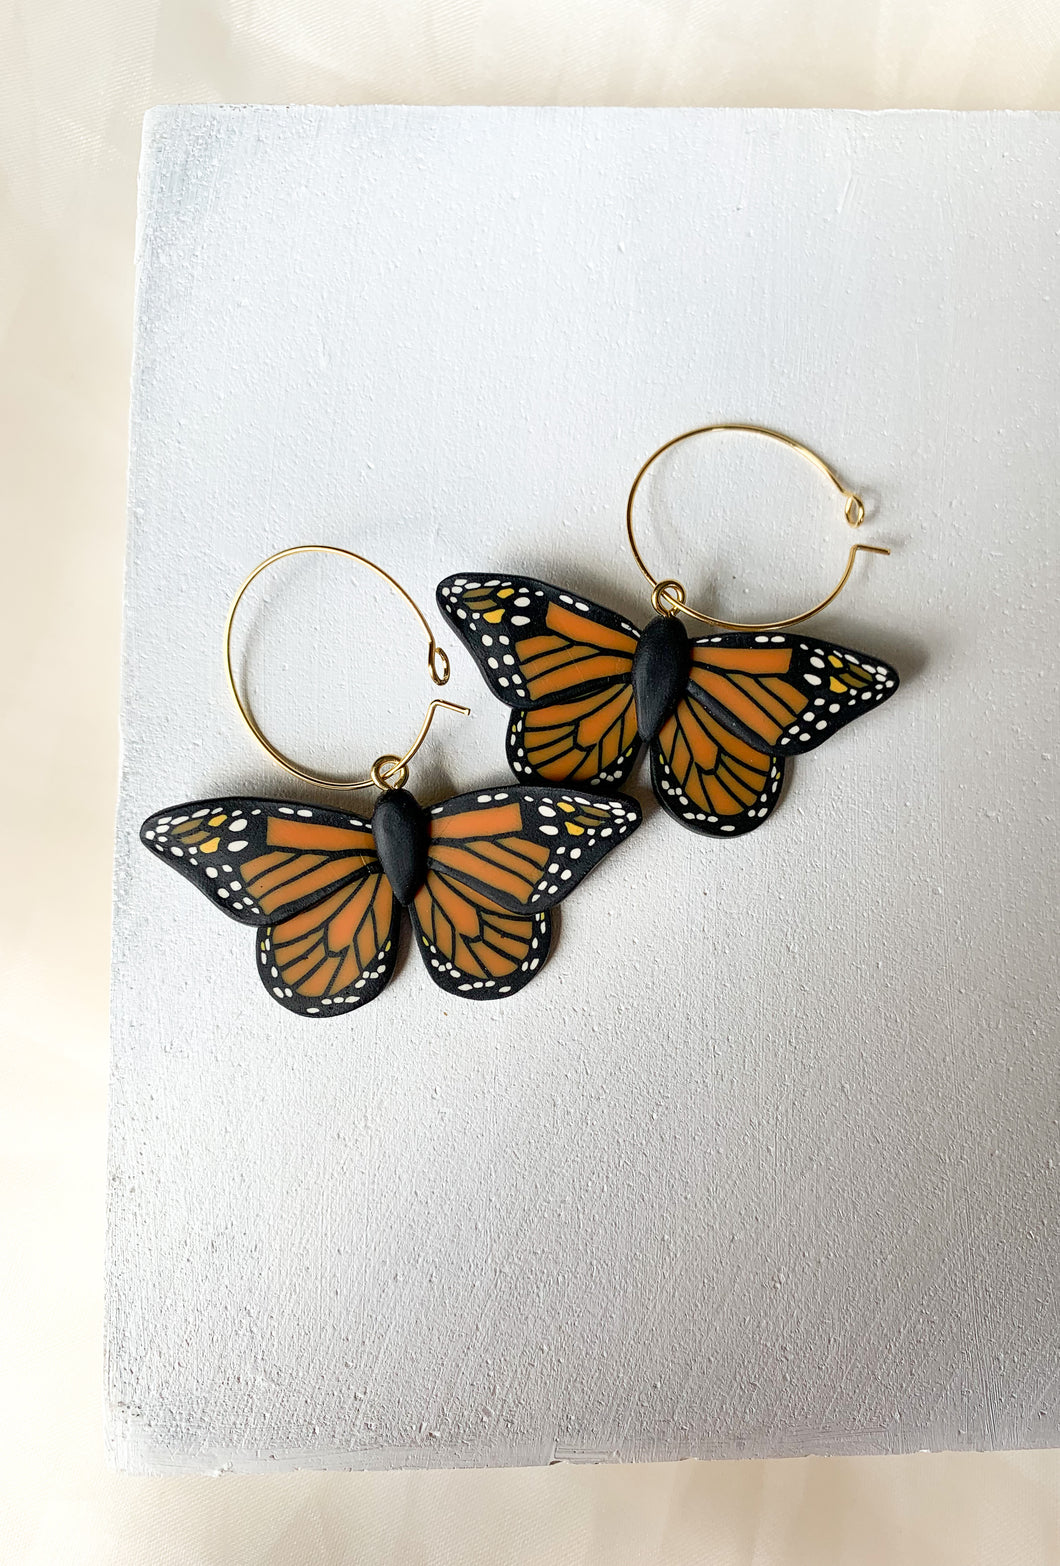 The Metamorphosis- Monarch Butterfly